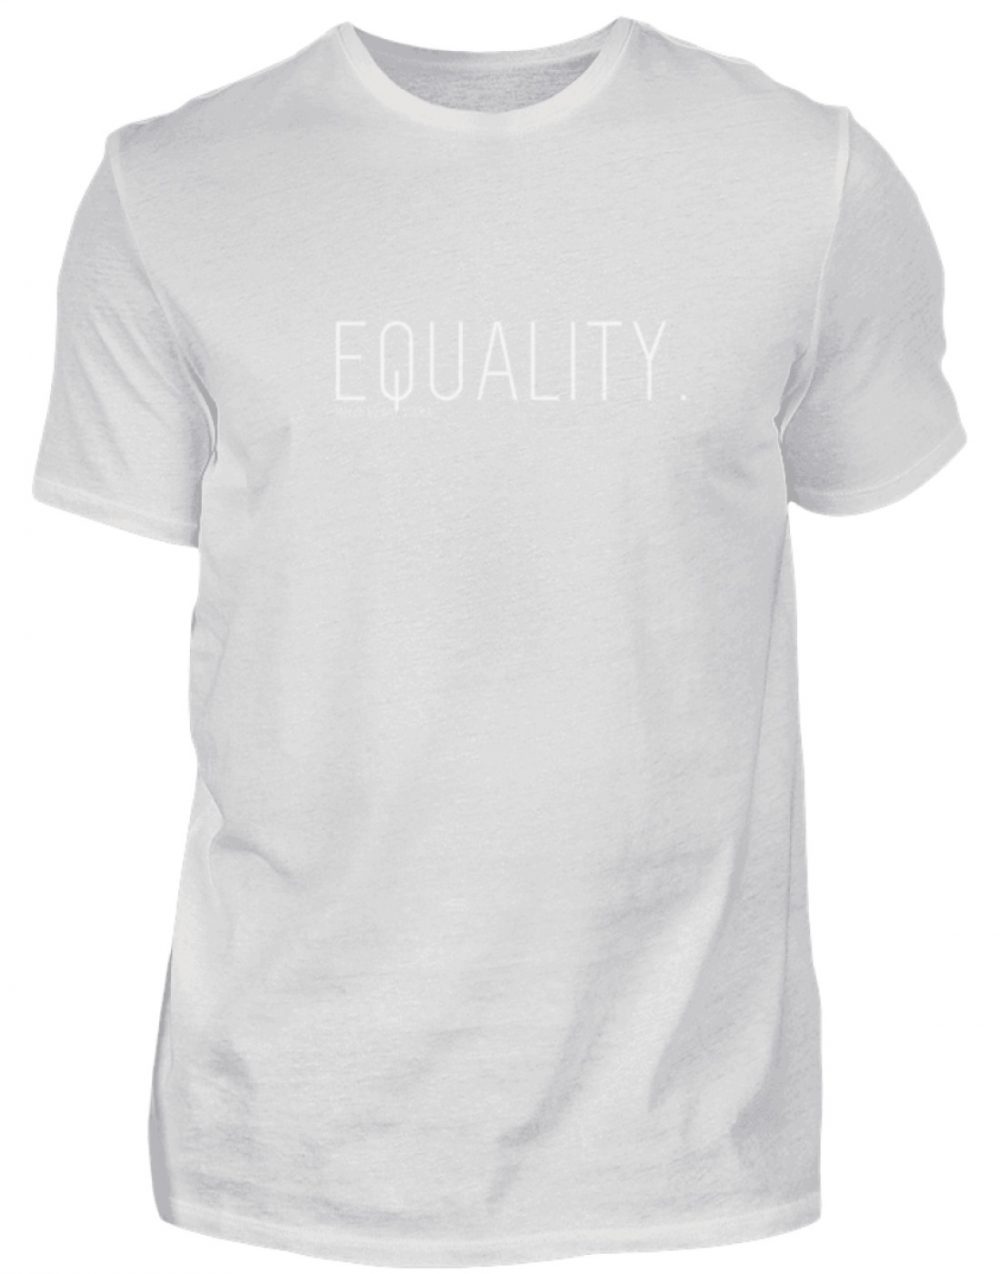 EQUALITY. - Herren Premiumshirt-1053